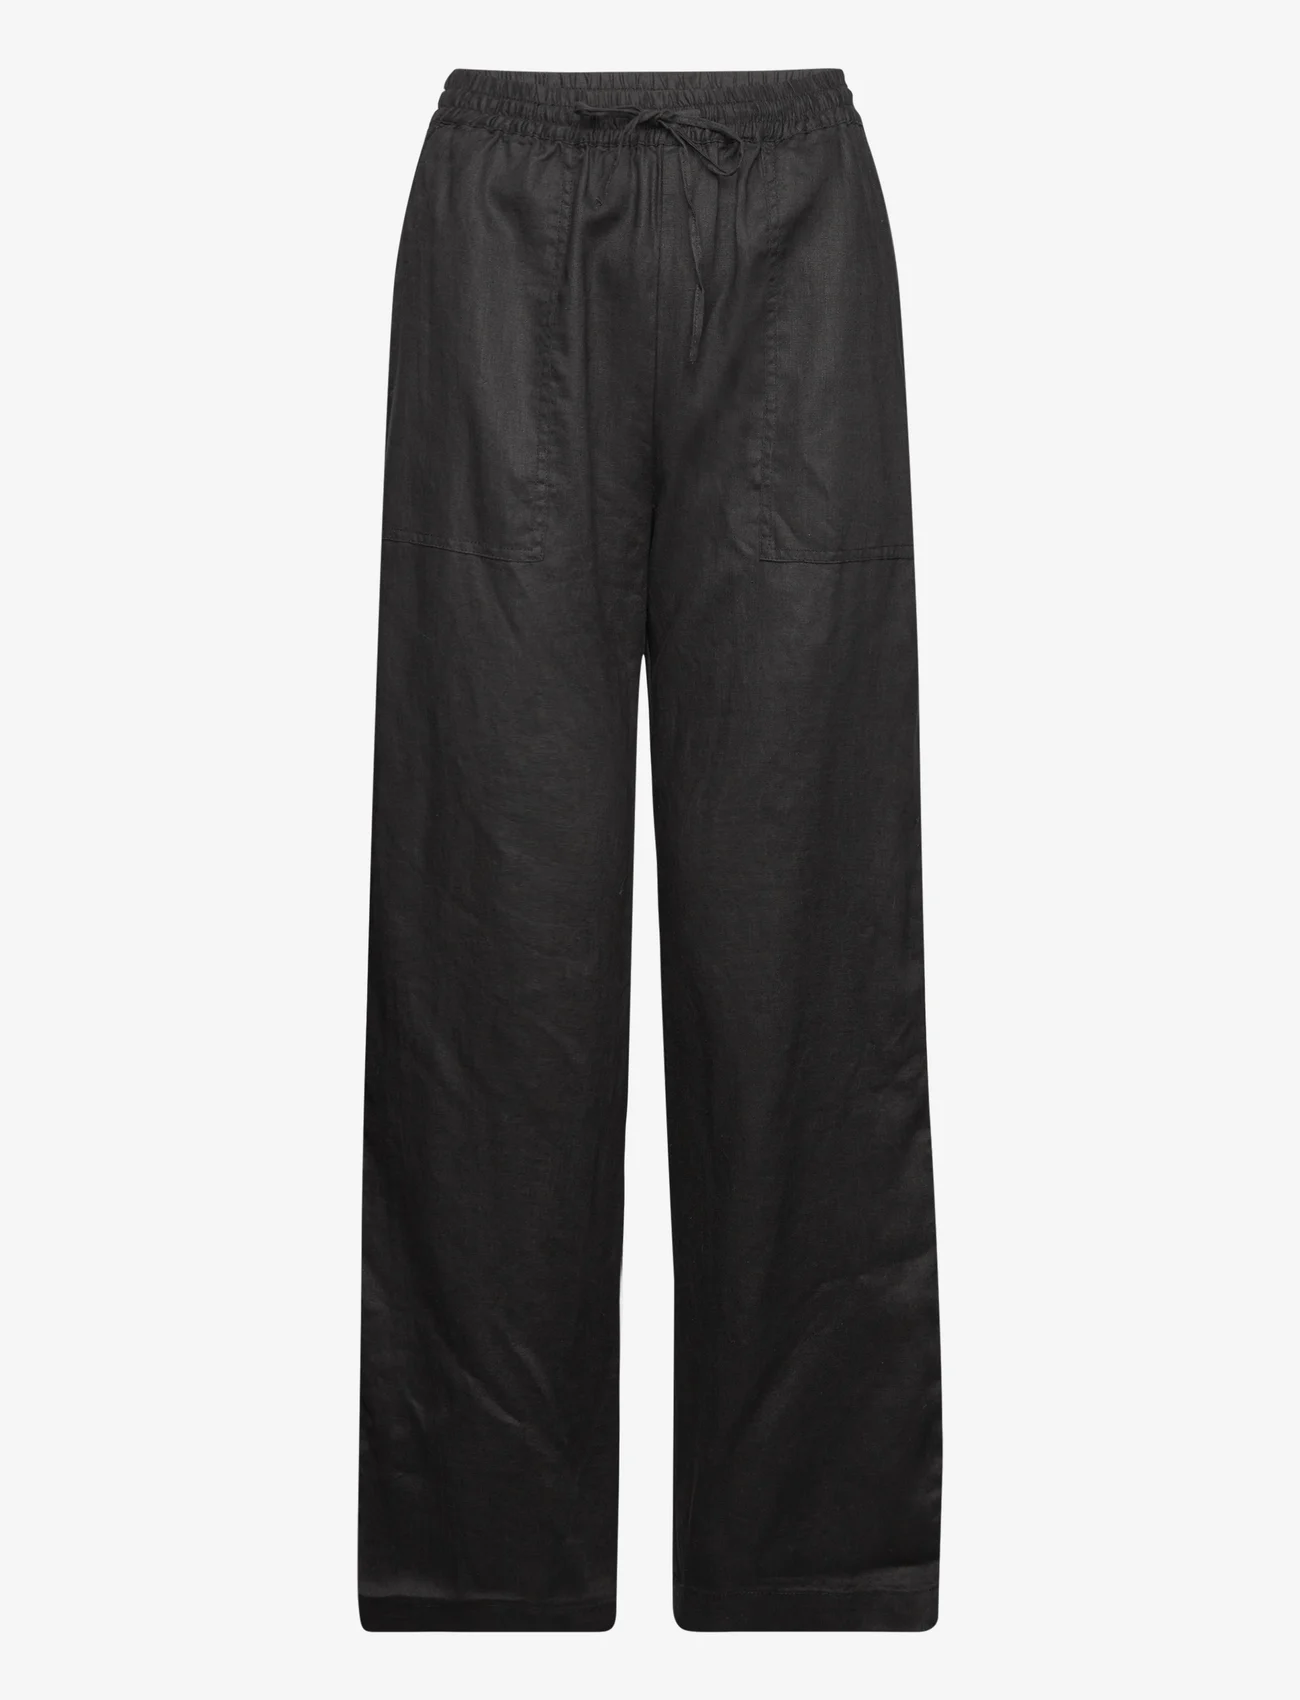 Part Two - EniolaPW PA - linen trousers - black - 0